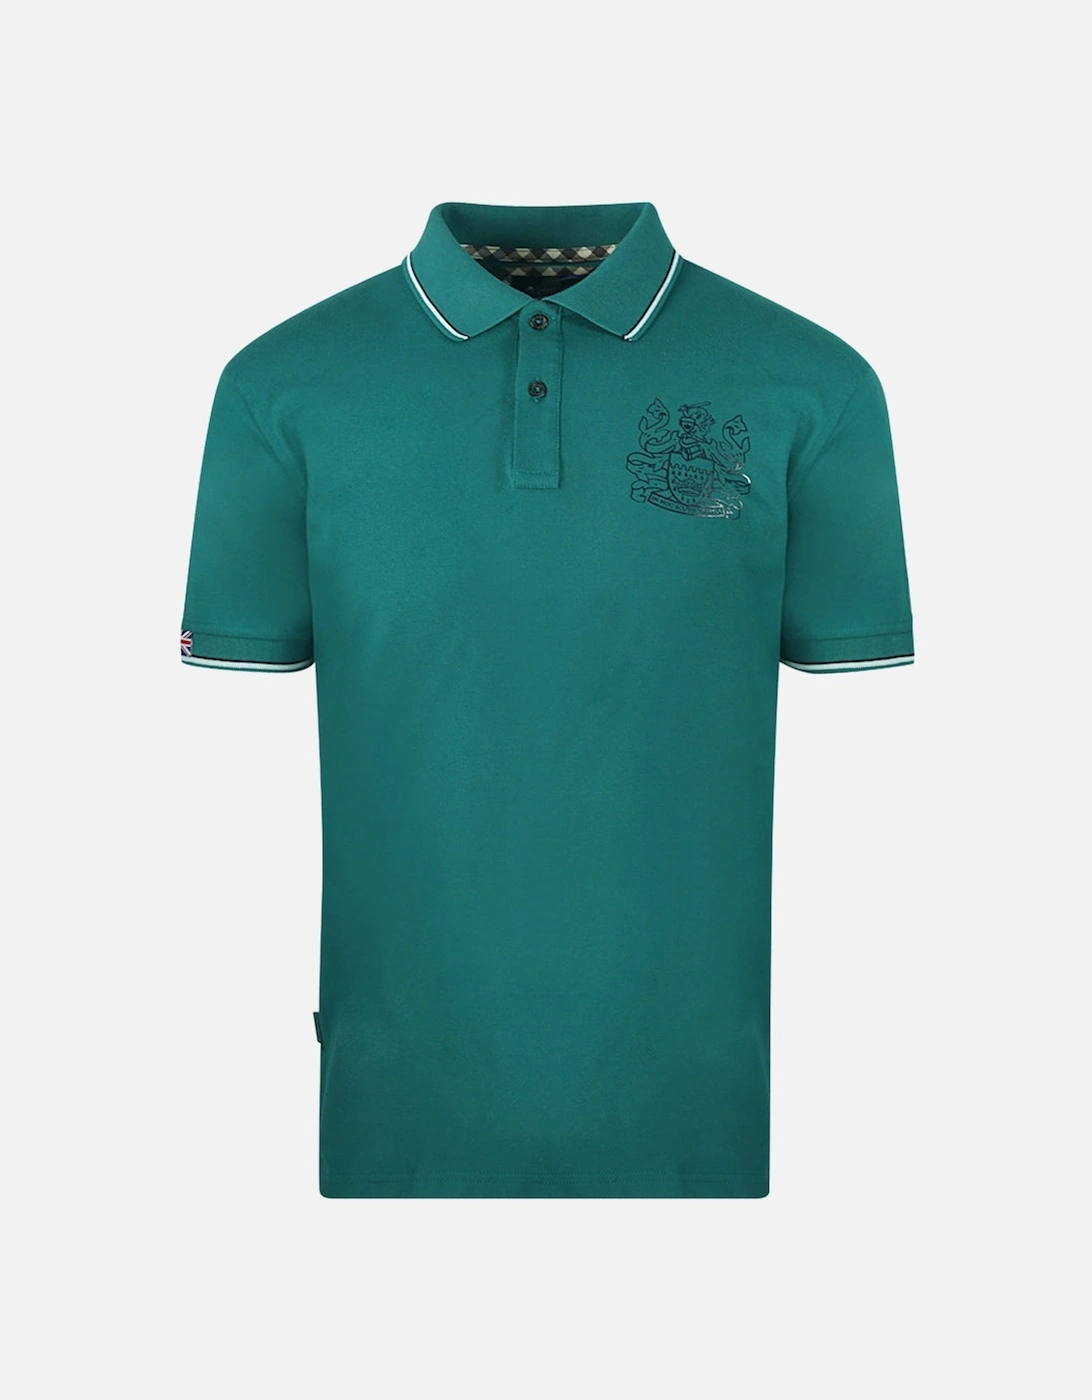 Aldis Crest Green Polo Shirt, 3 of 2